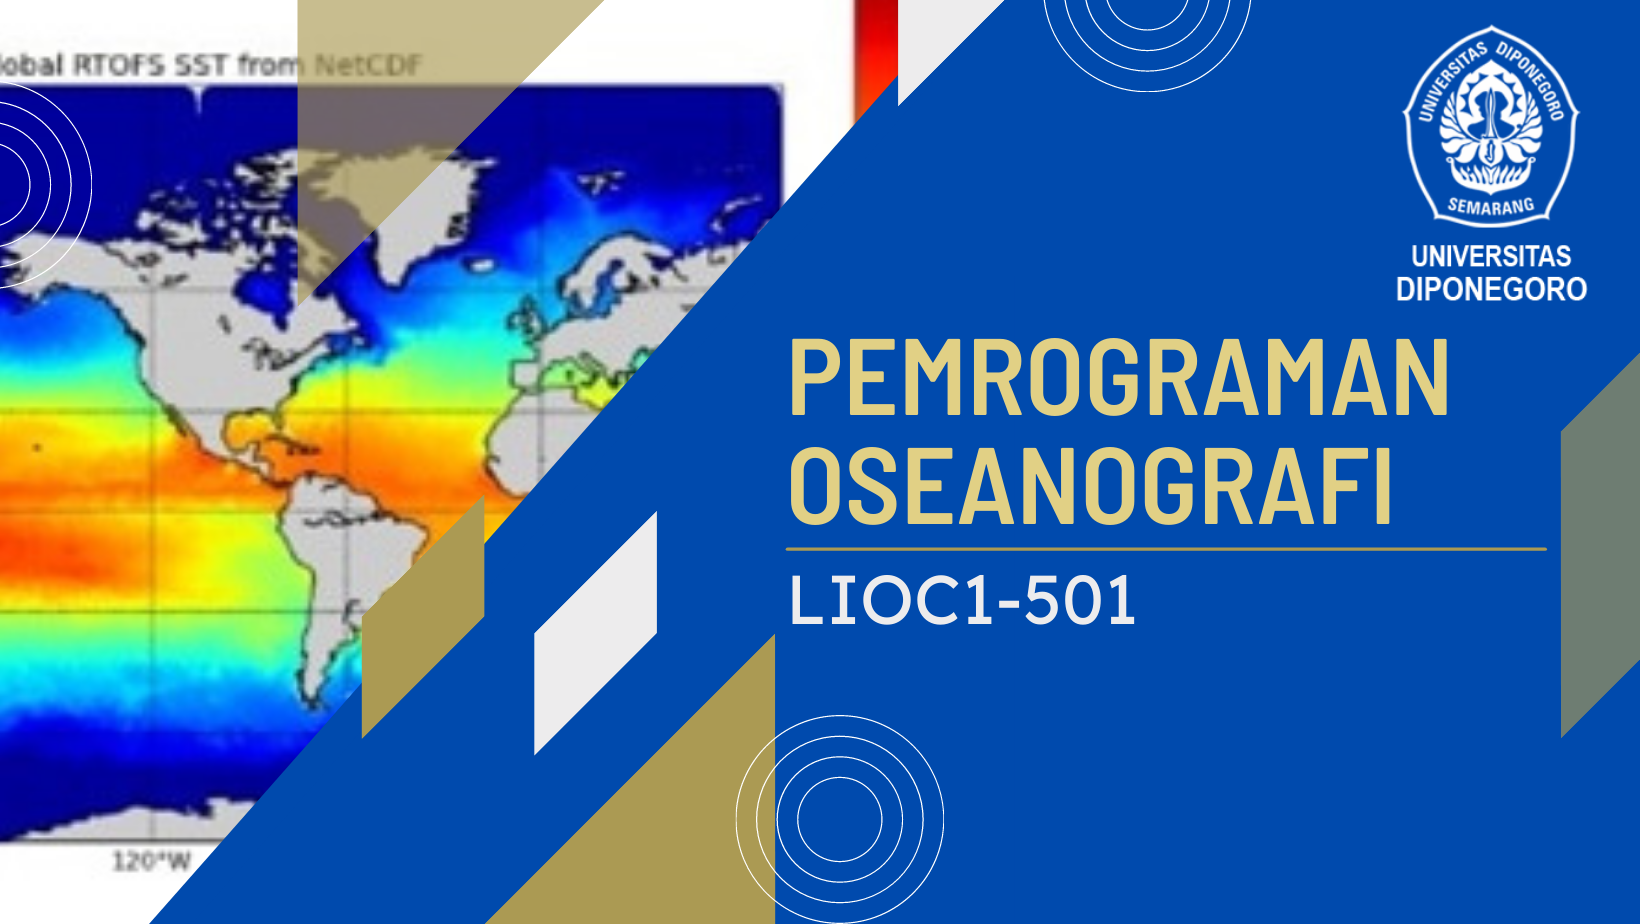 Pemrograman Oseanografi LIOC1-501/001008412005